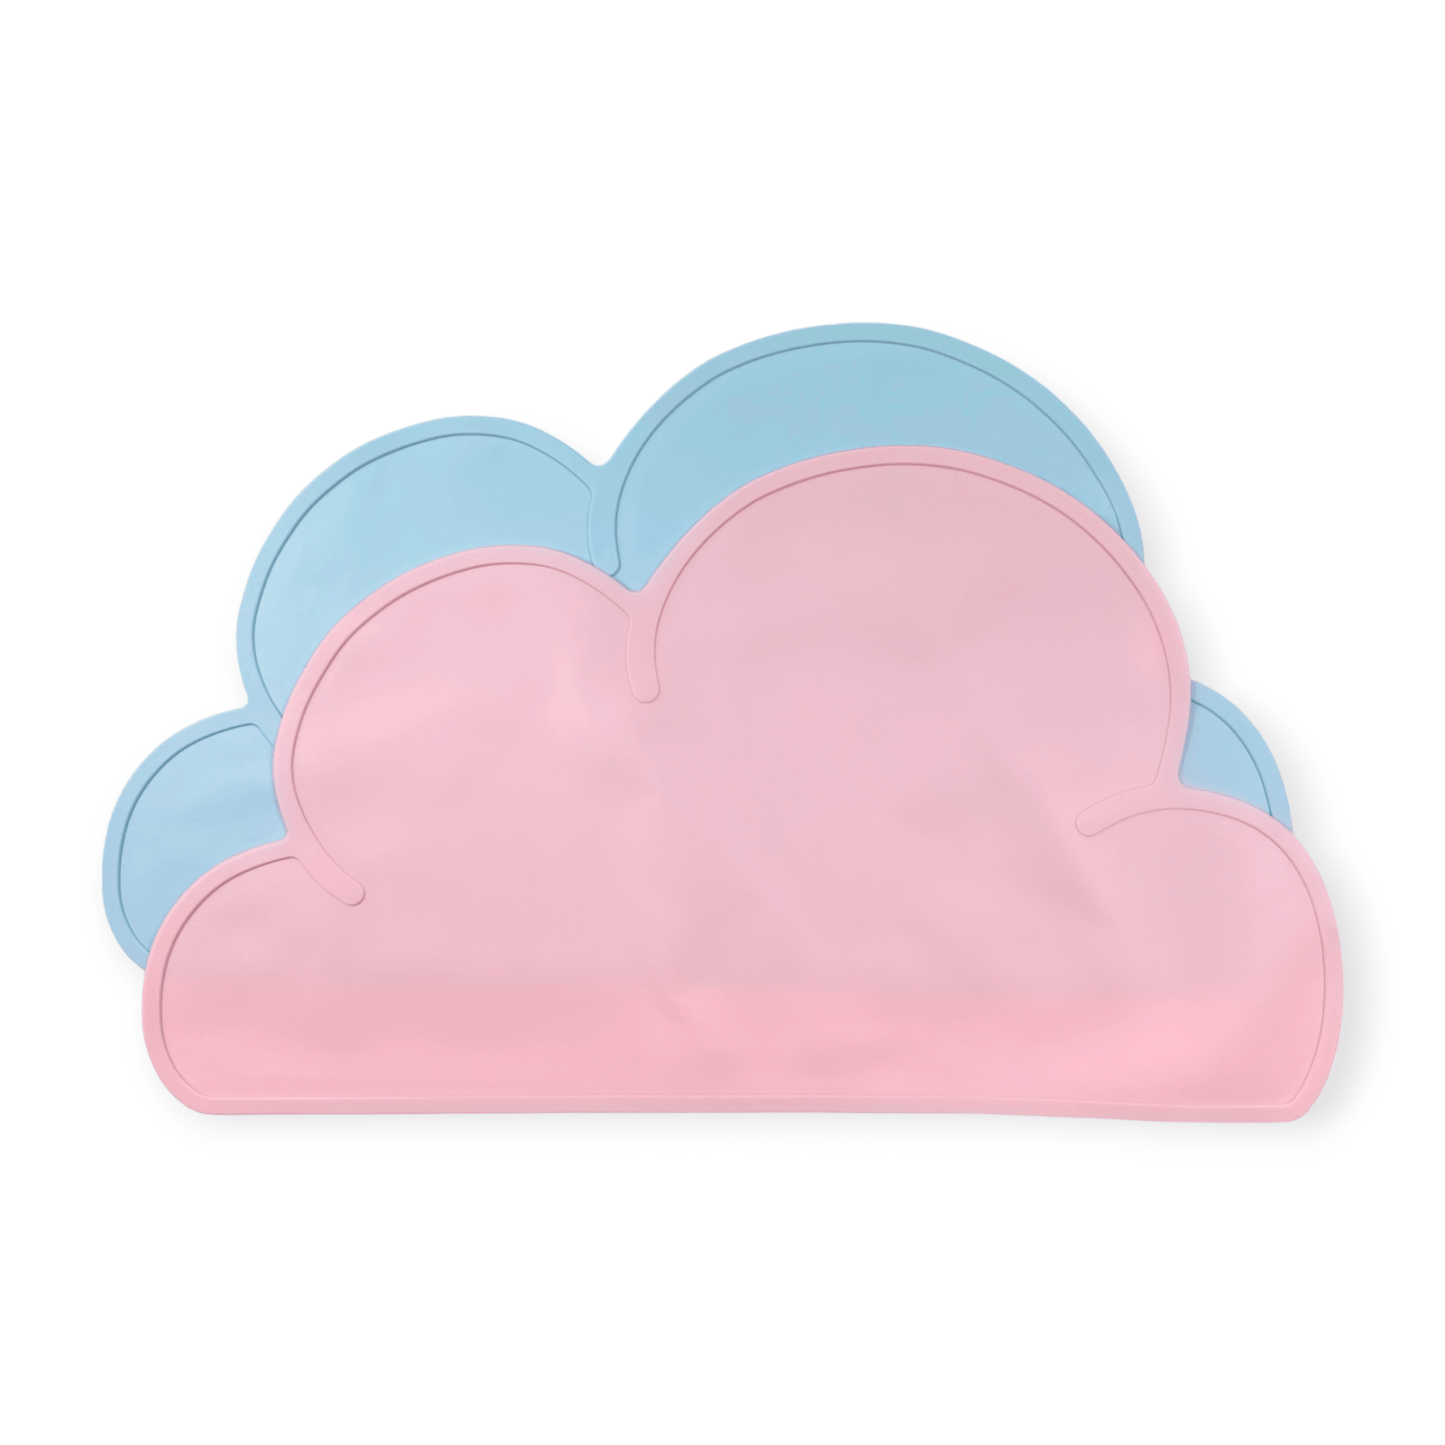 Cloud Shaped Fun: Food-Grade Silicone Dough Mats for Creative Kids